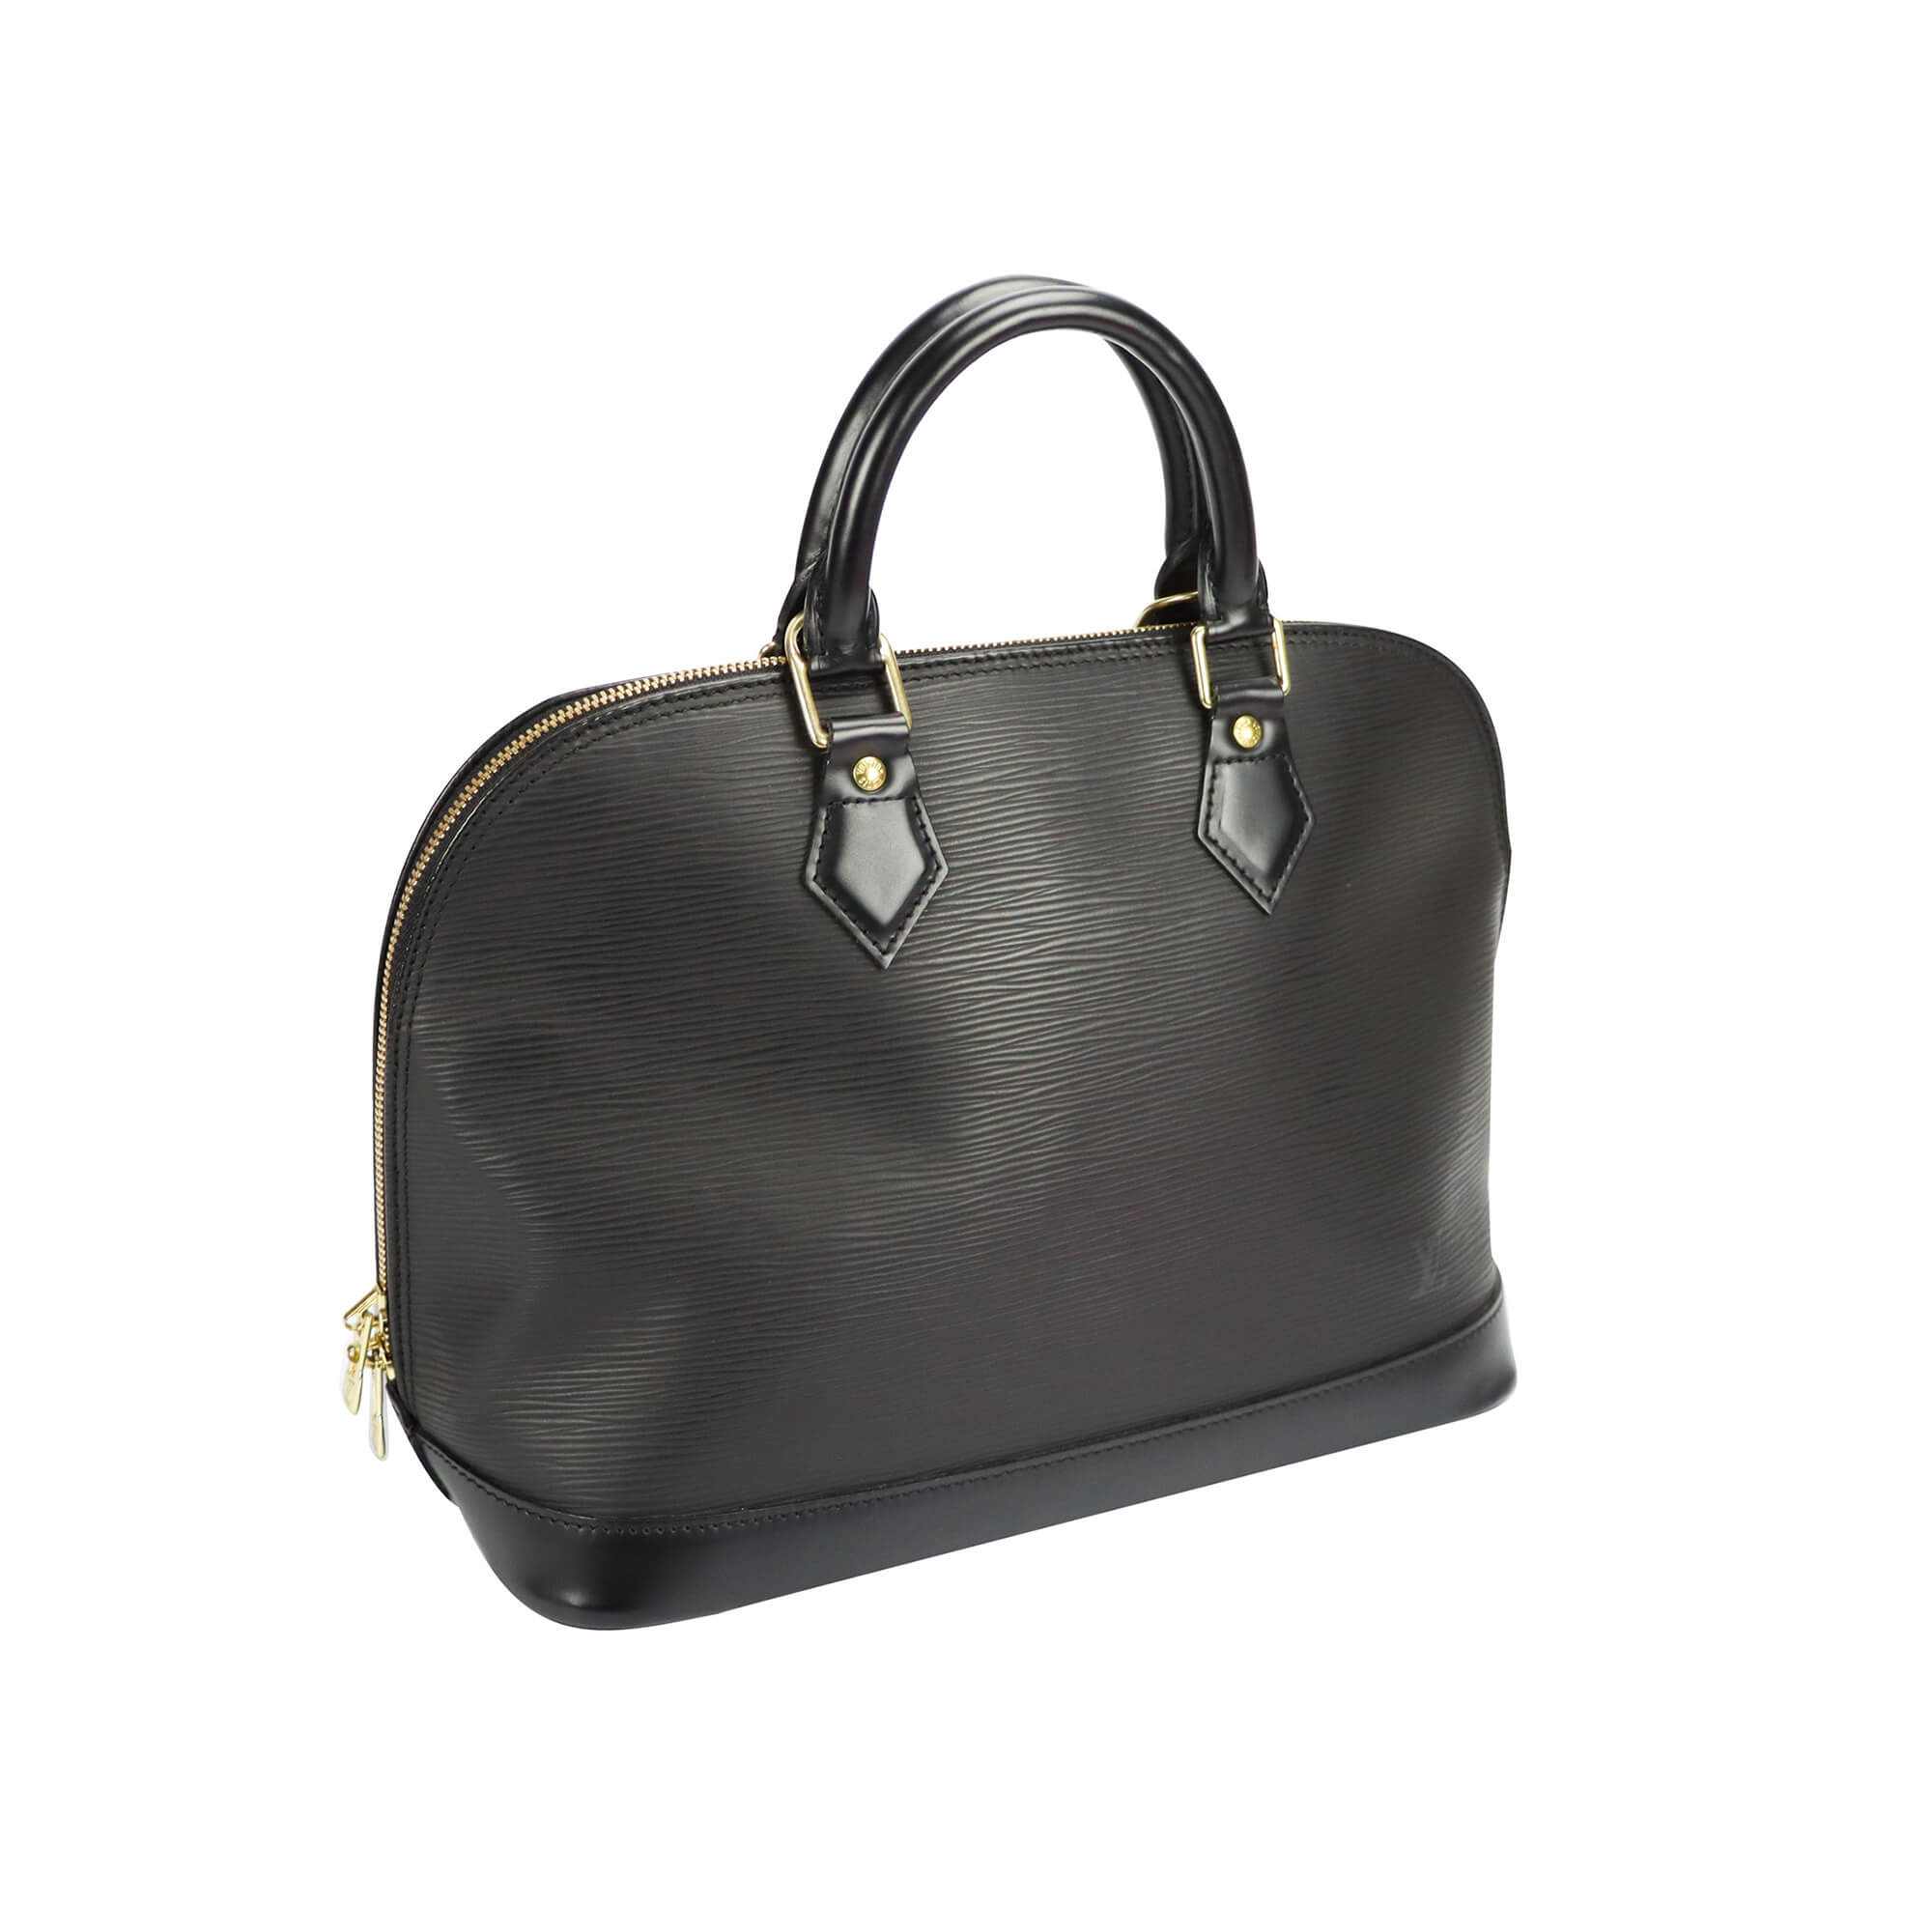 Louis Vuitton Alma PM handbag in black EPI leather